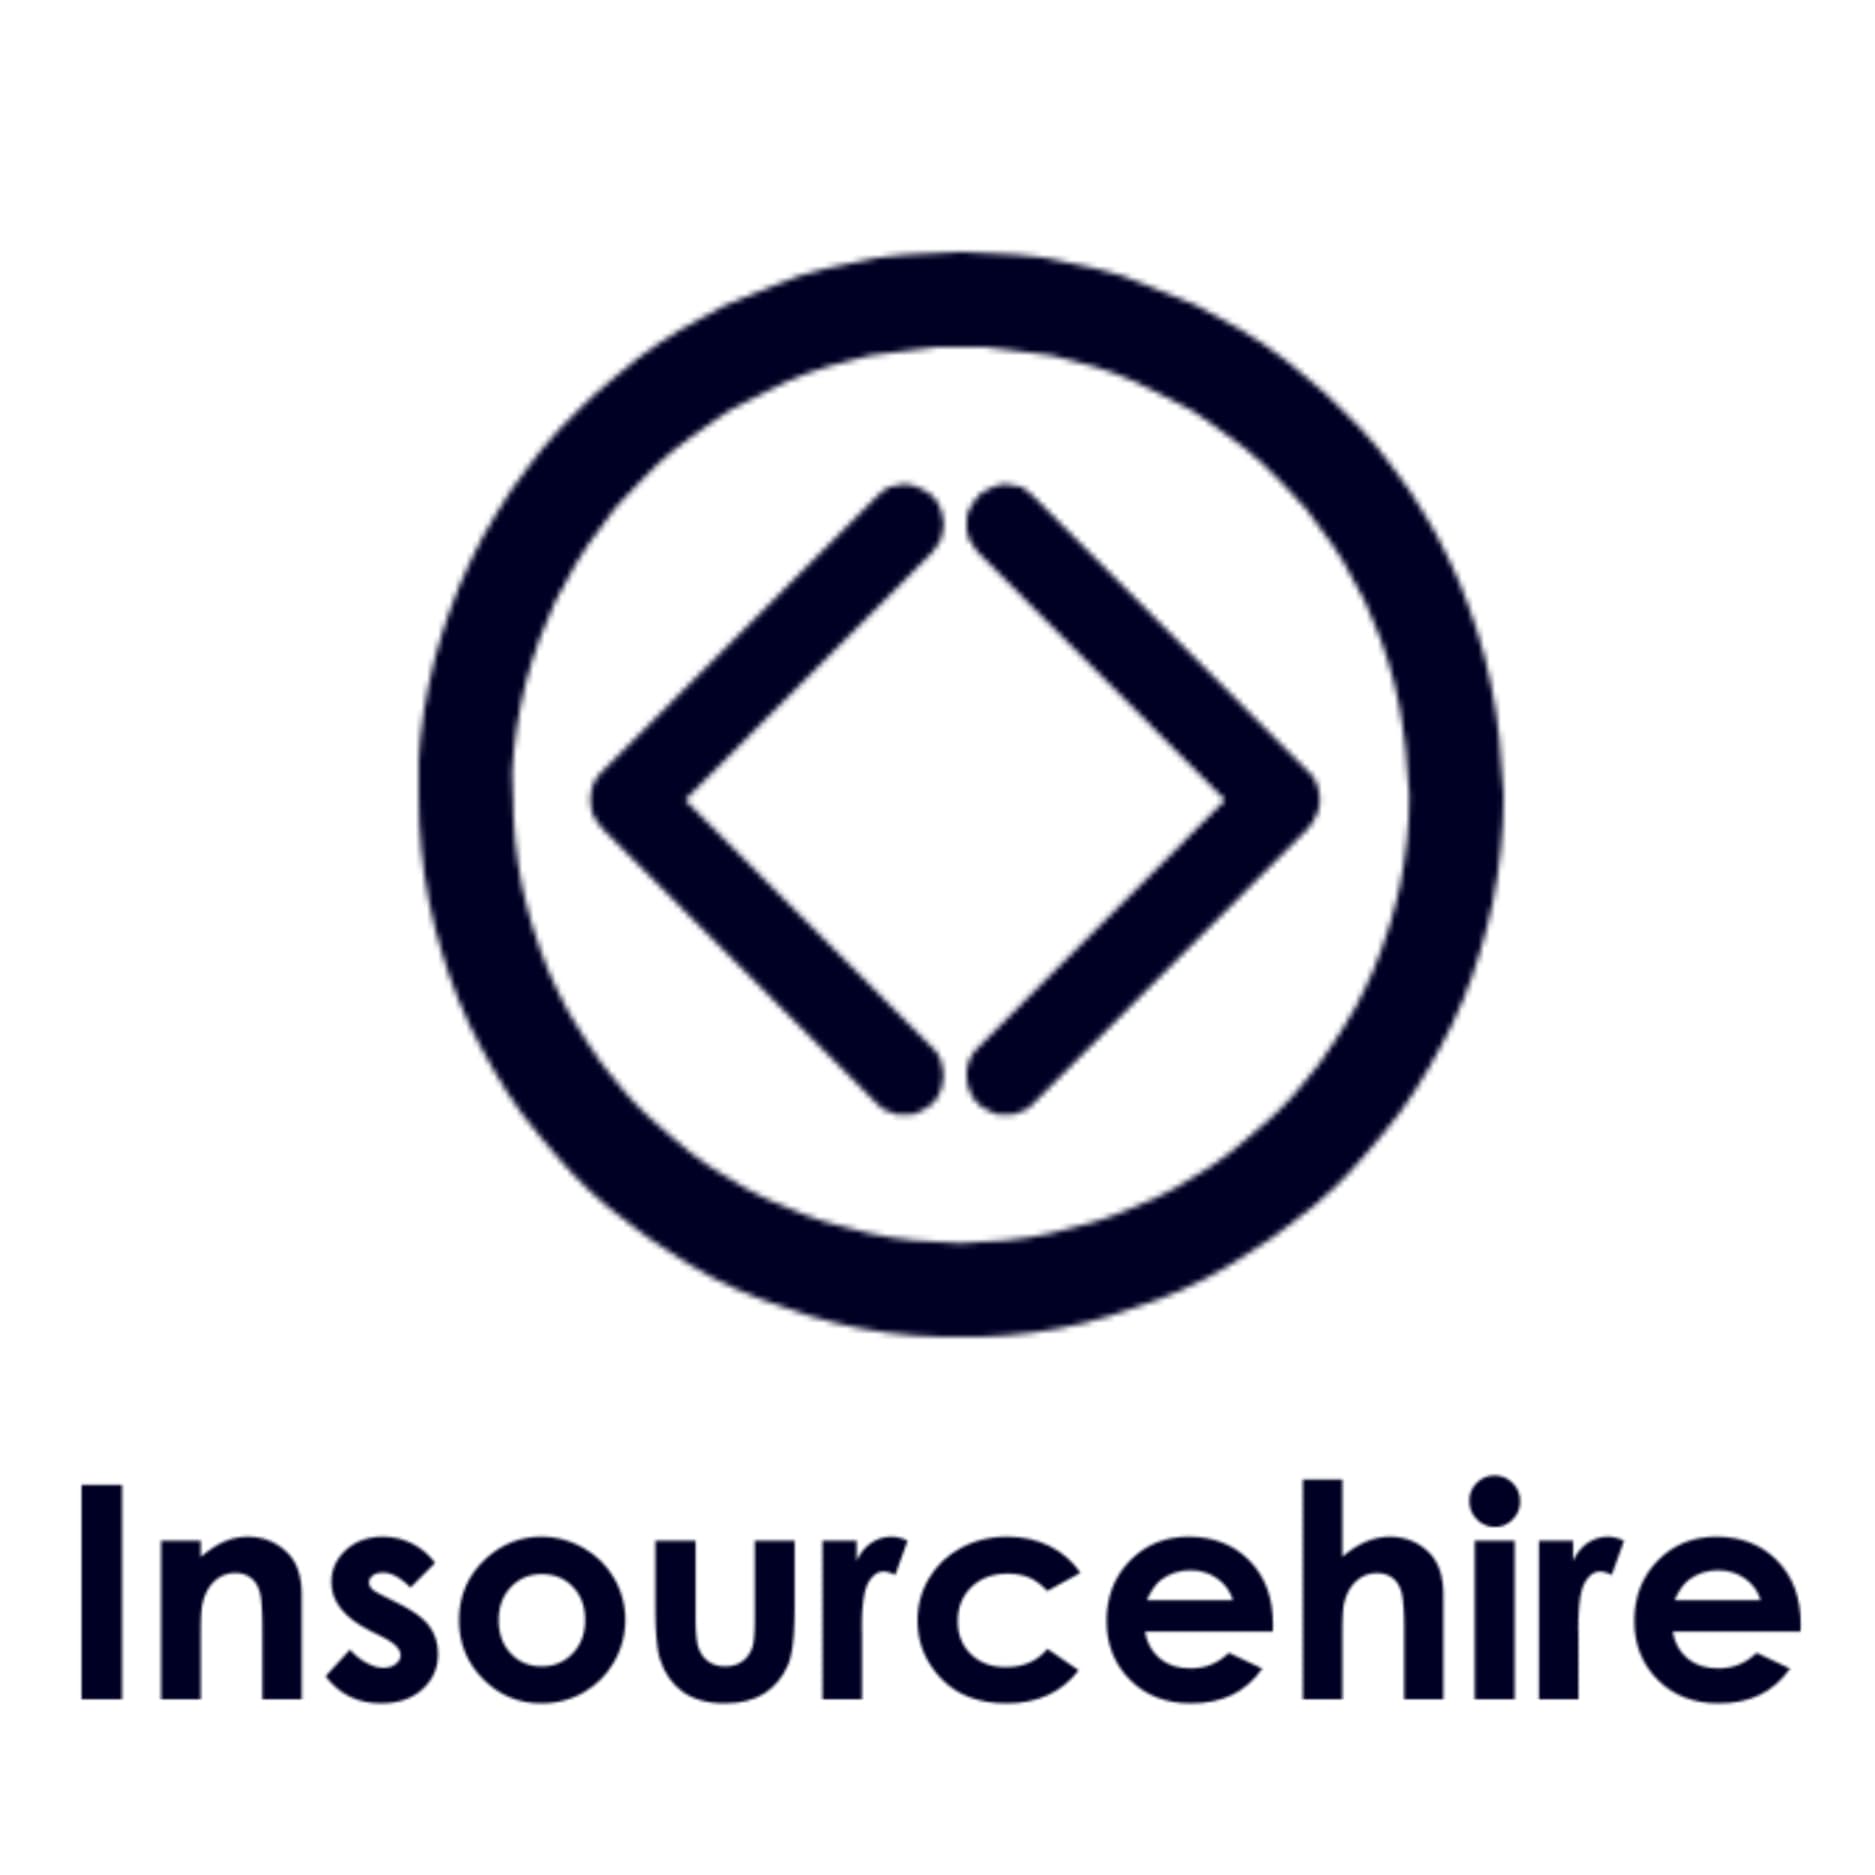 Insourcehire's logo